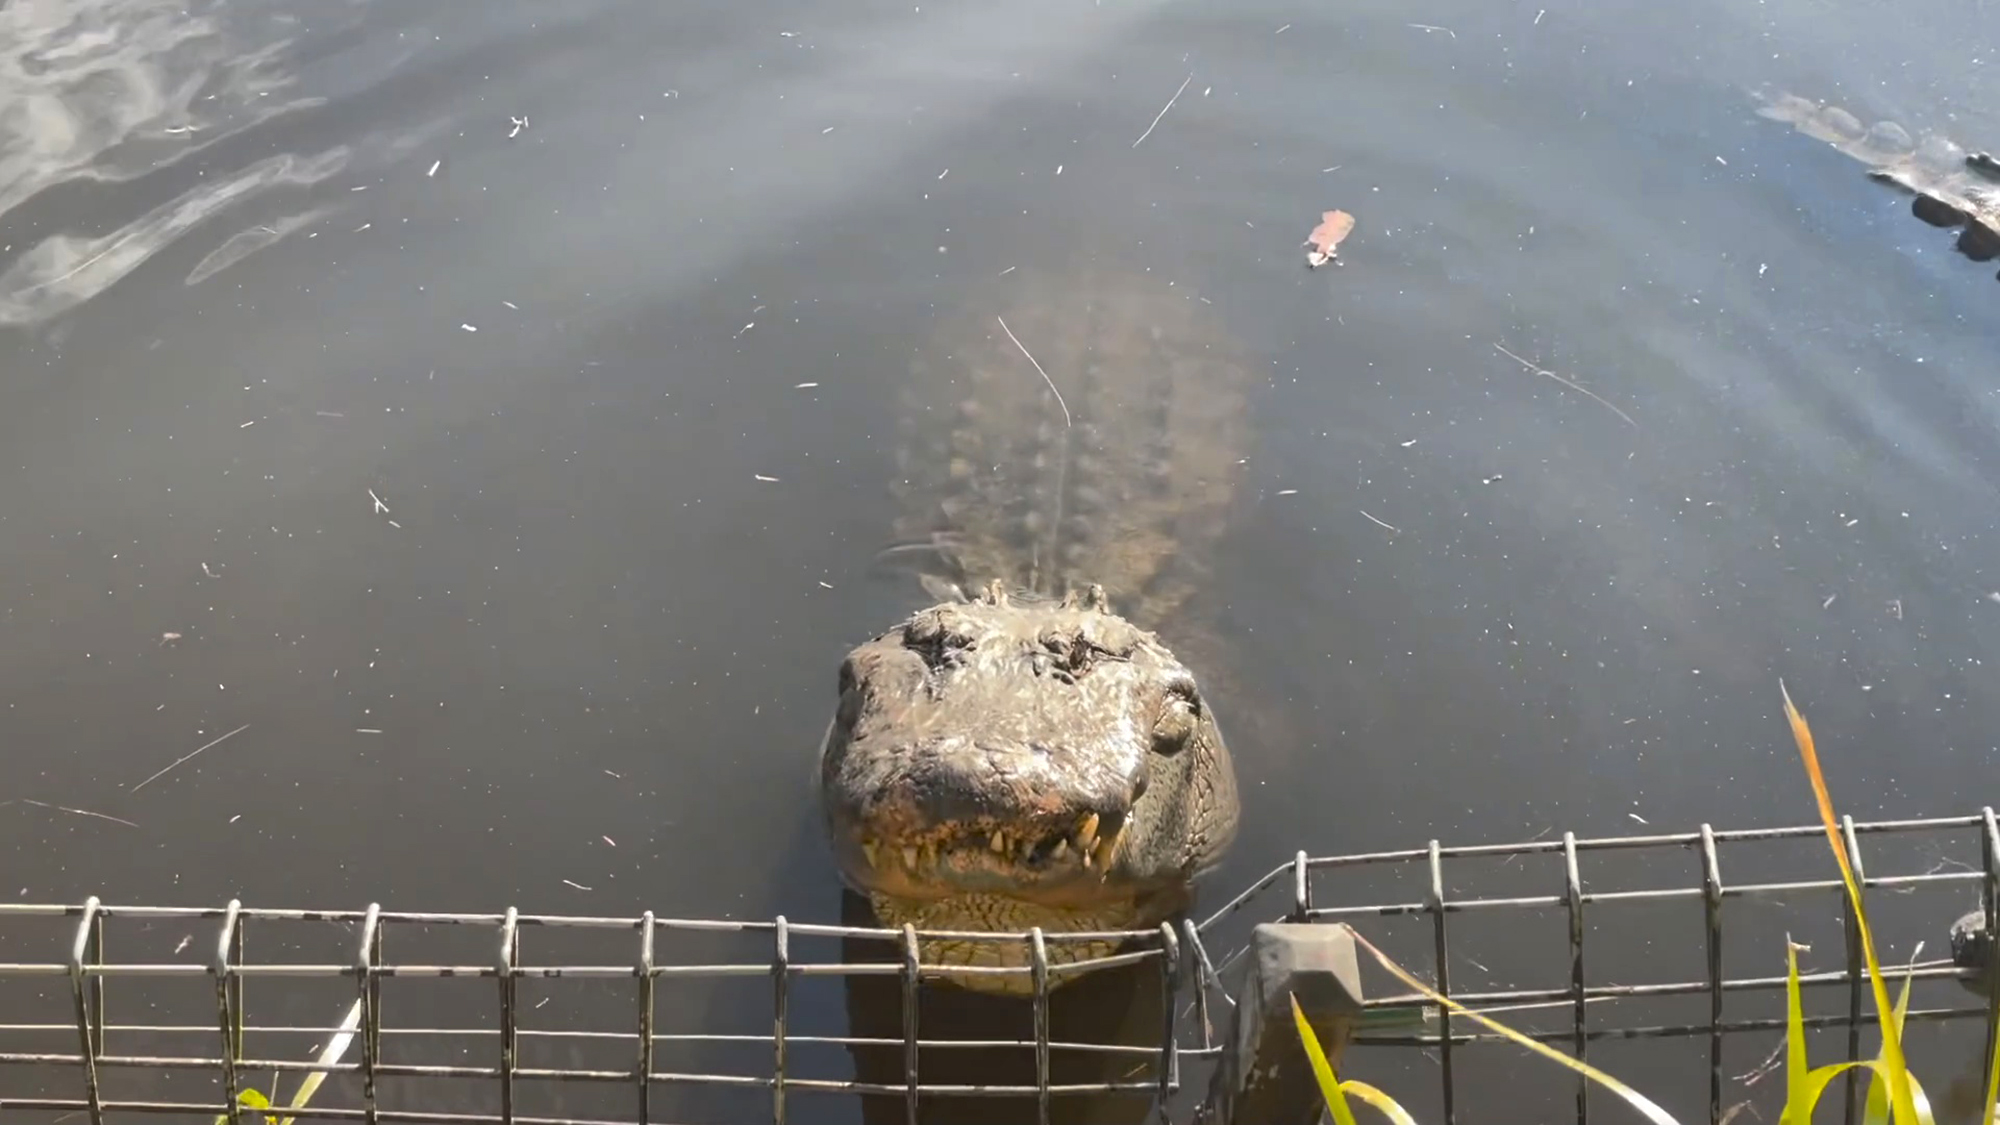 VIDEO: Mating Call of Half-Ton Gators Turns into 'Chorus of Lawn Mowers'